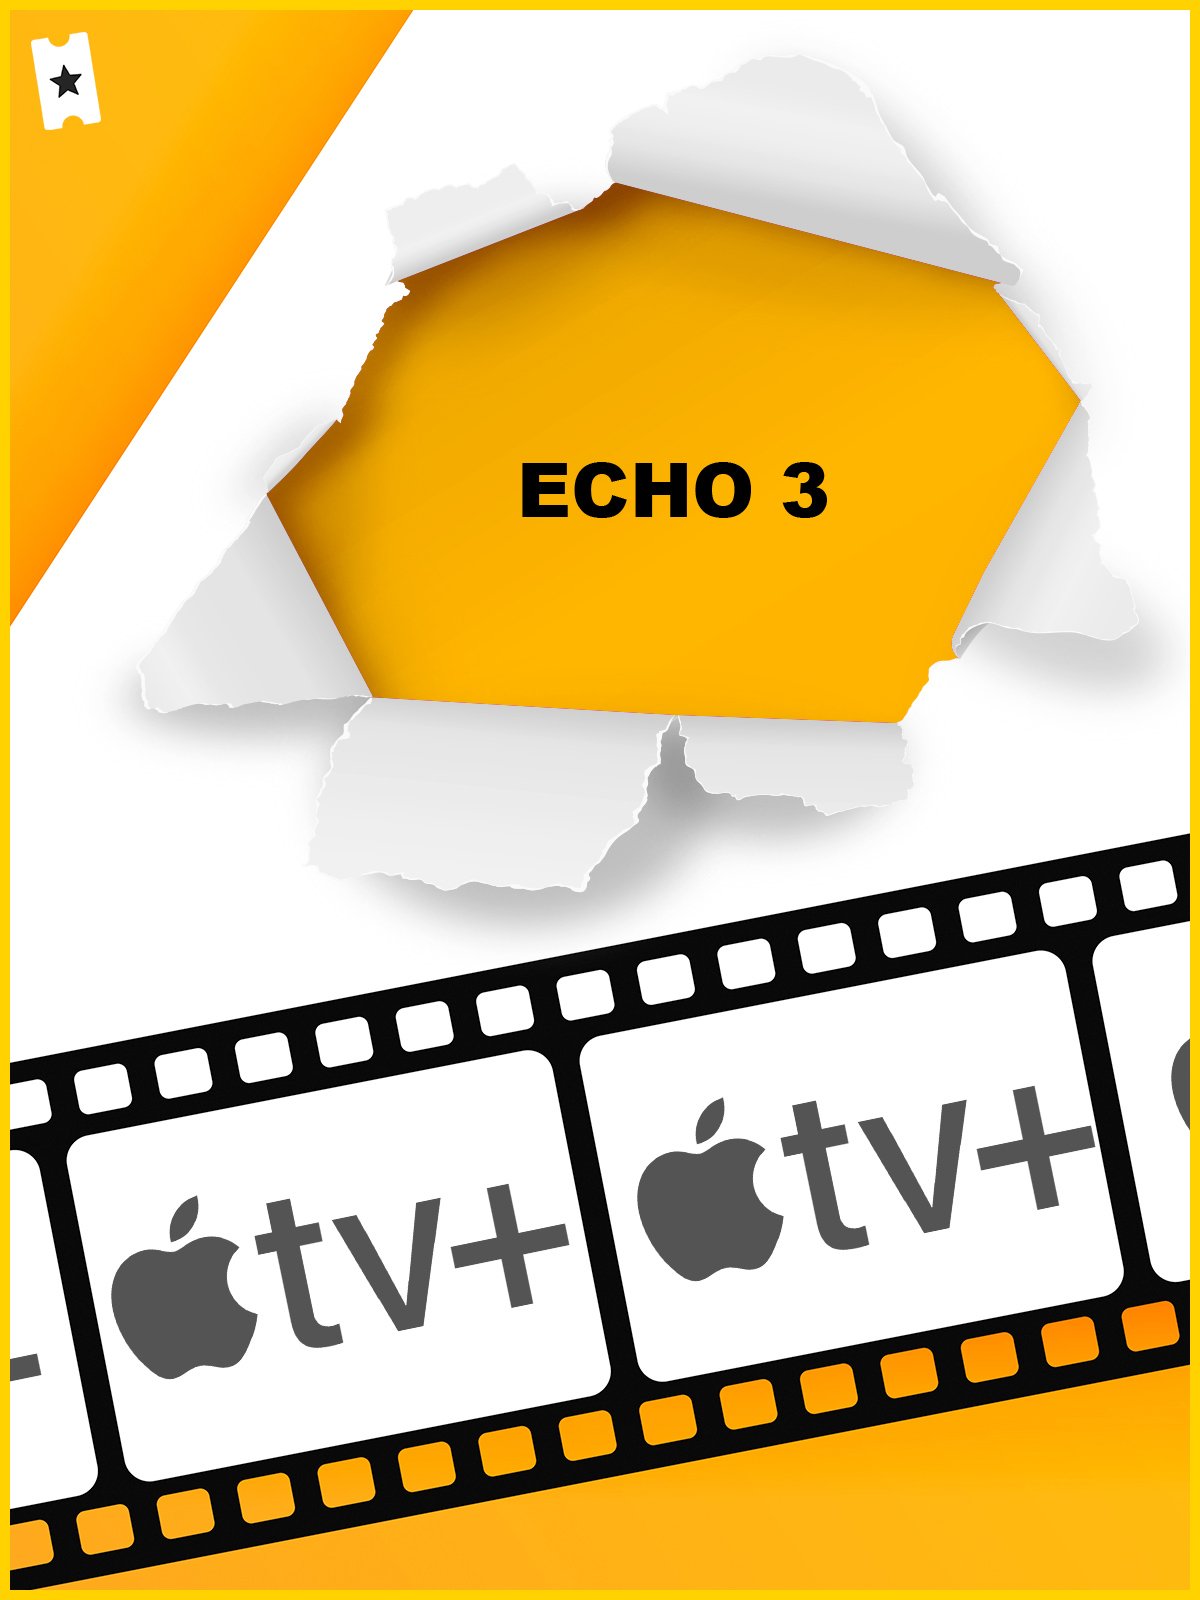 echo 3 episode 10 trailer